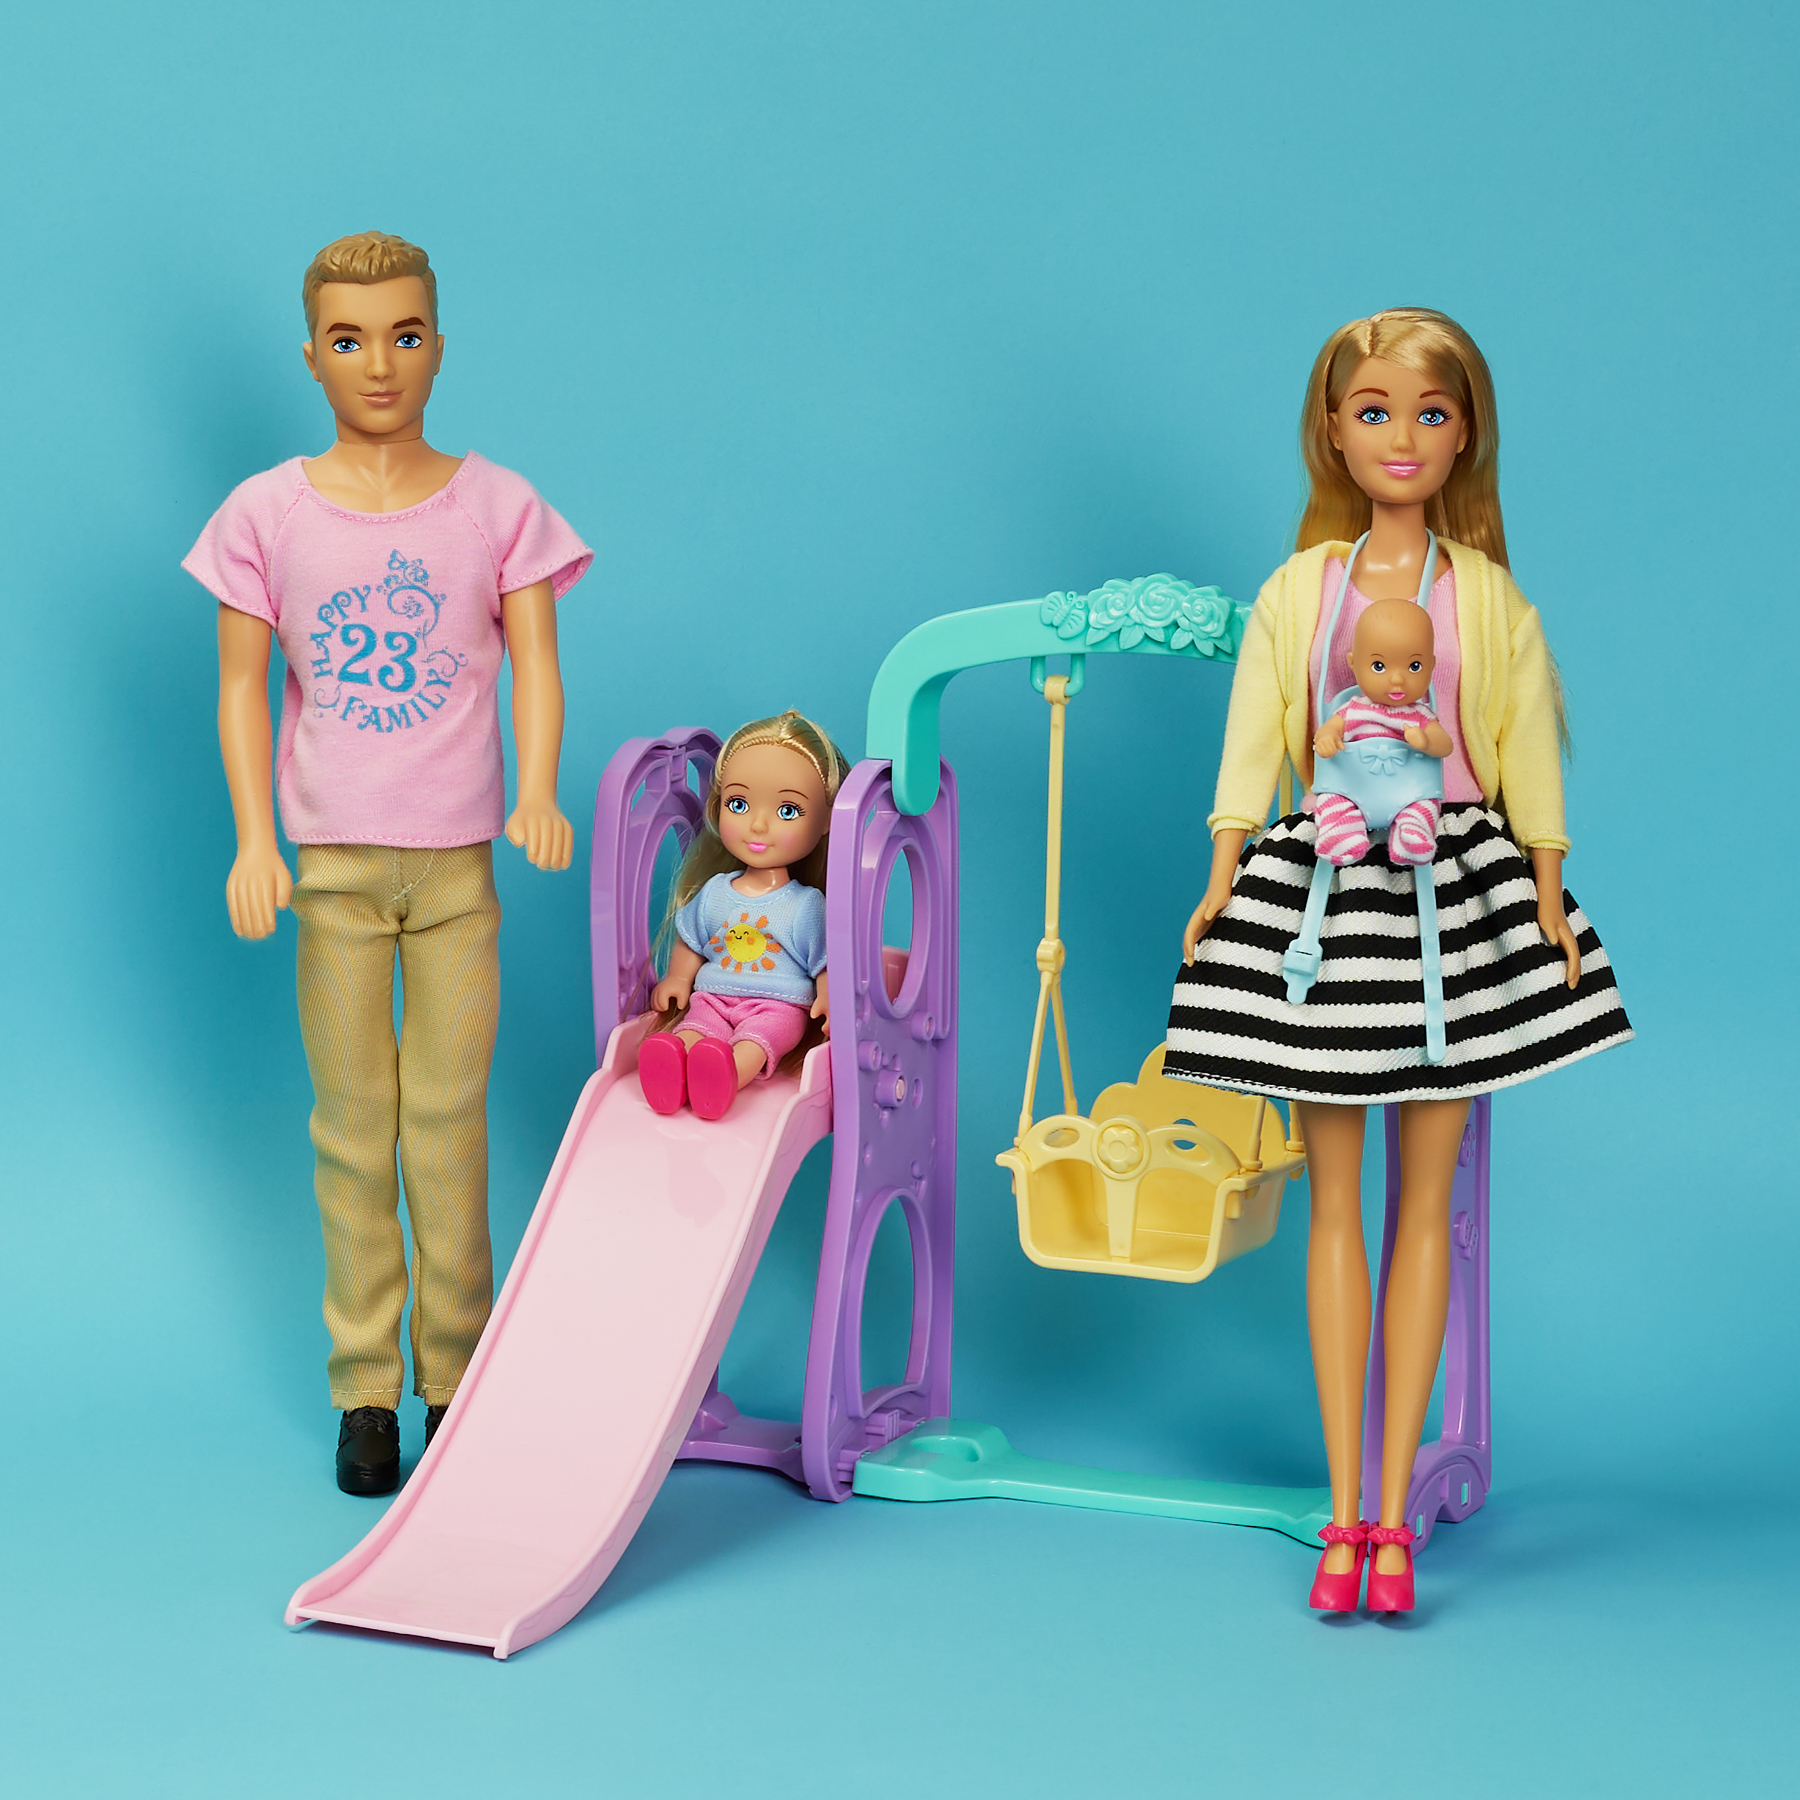 Набор кукол для девочек "Семья" на прогулке, 40х32х8см, ABS пластик - #13